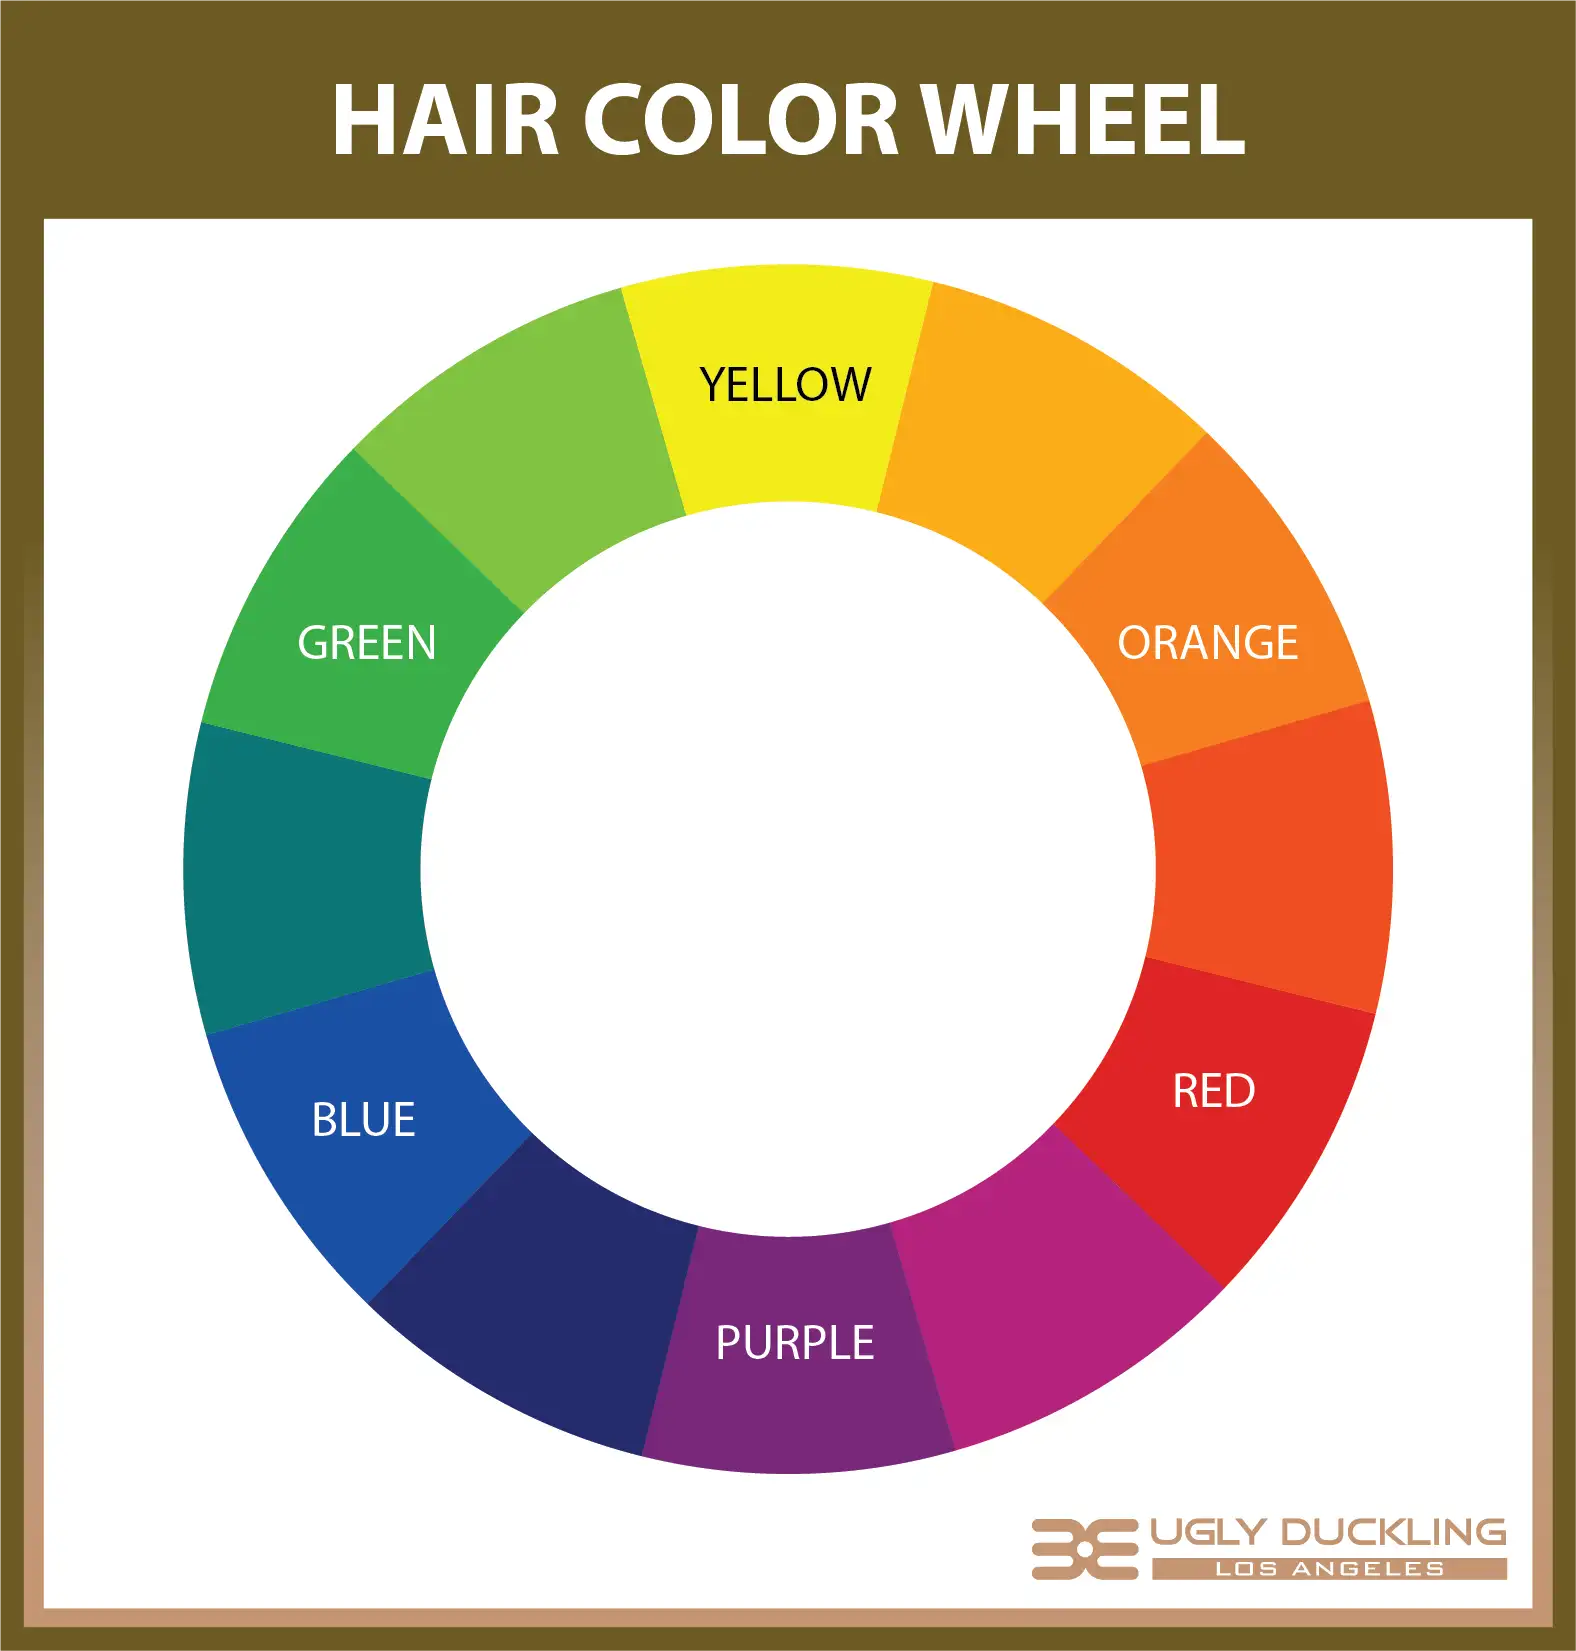 Hair Color Wheel & Color Wheel Toners